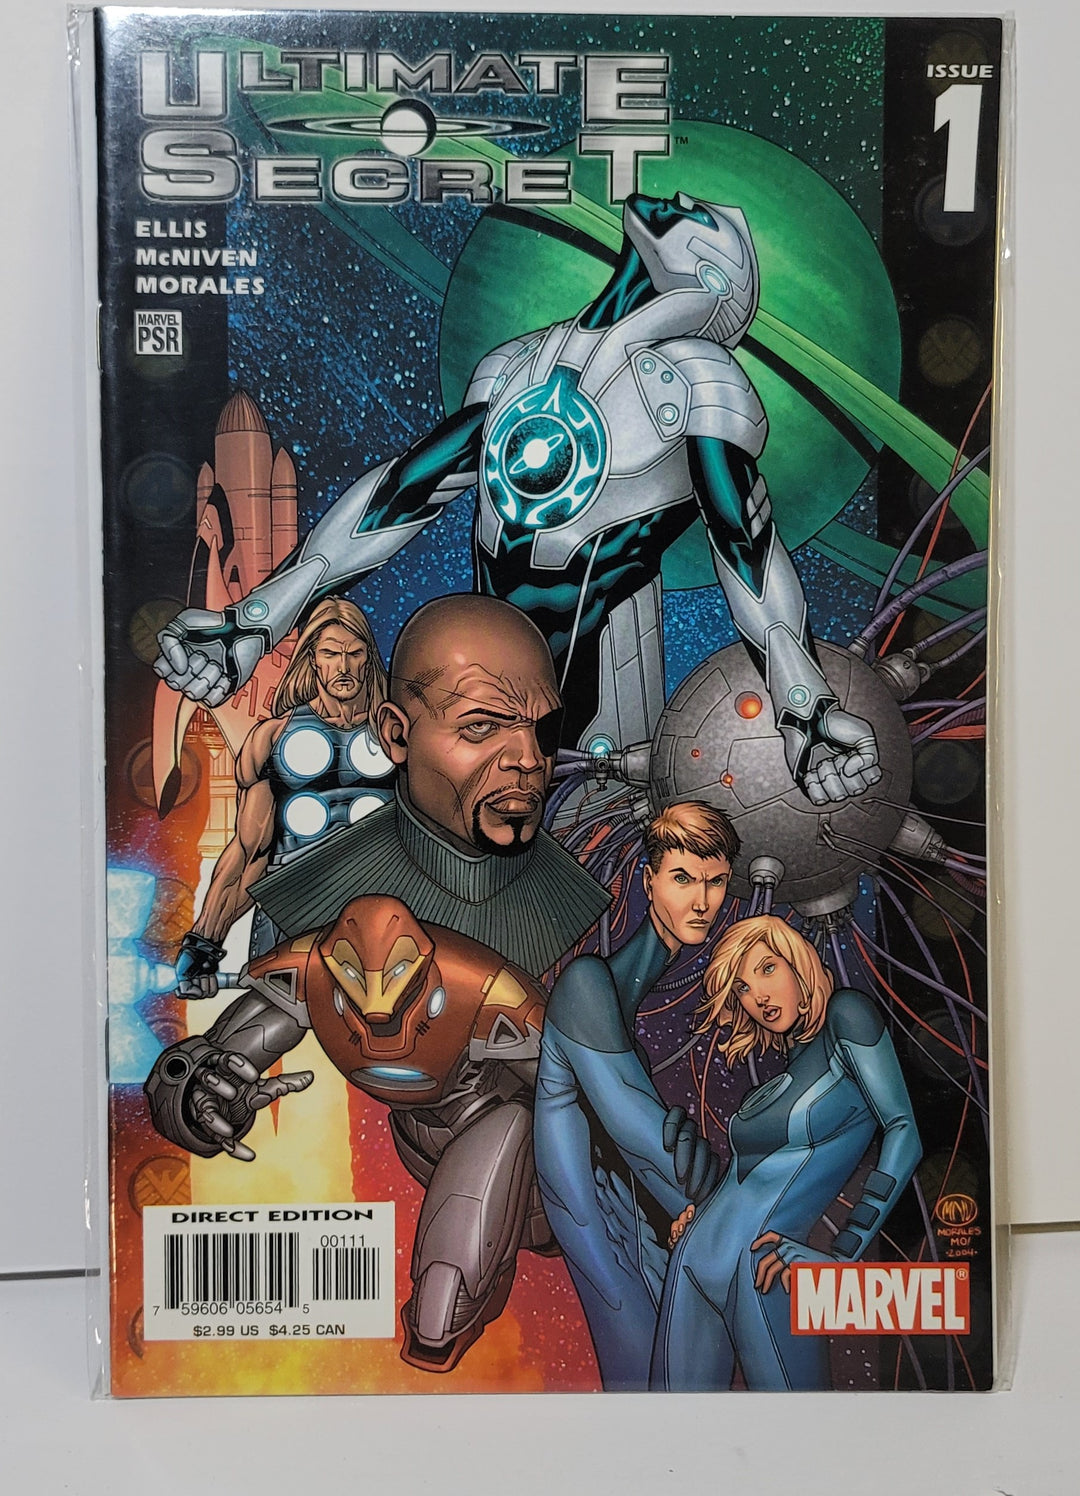 Ultimate Secret #1 Issue Marvel Comics: Nick Fury, Iron Man, Thor +++